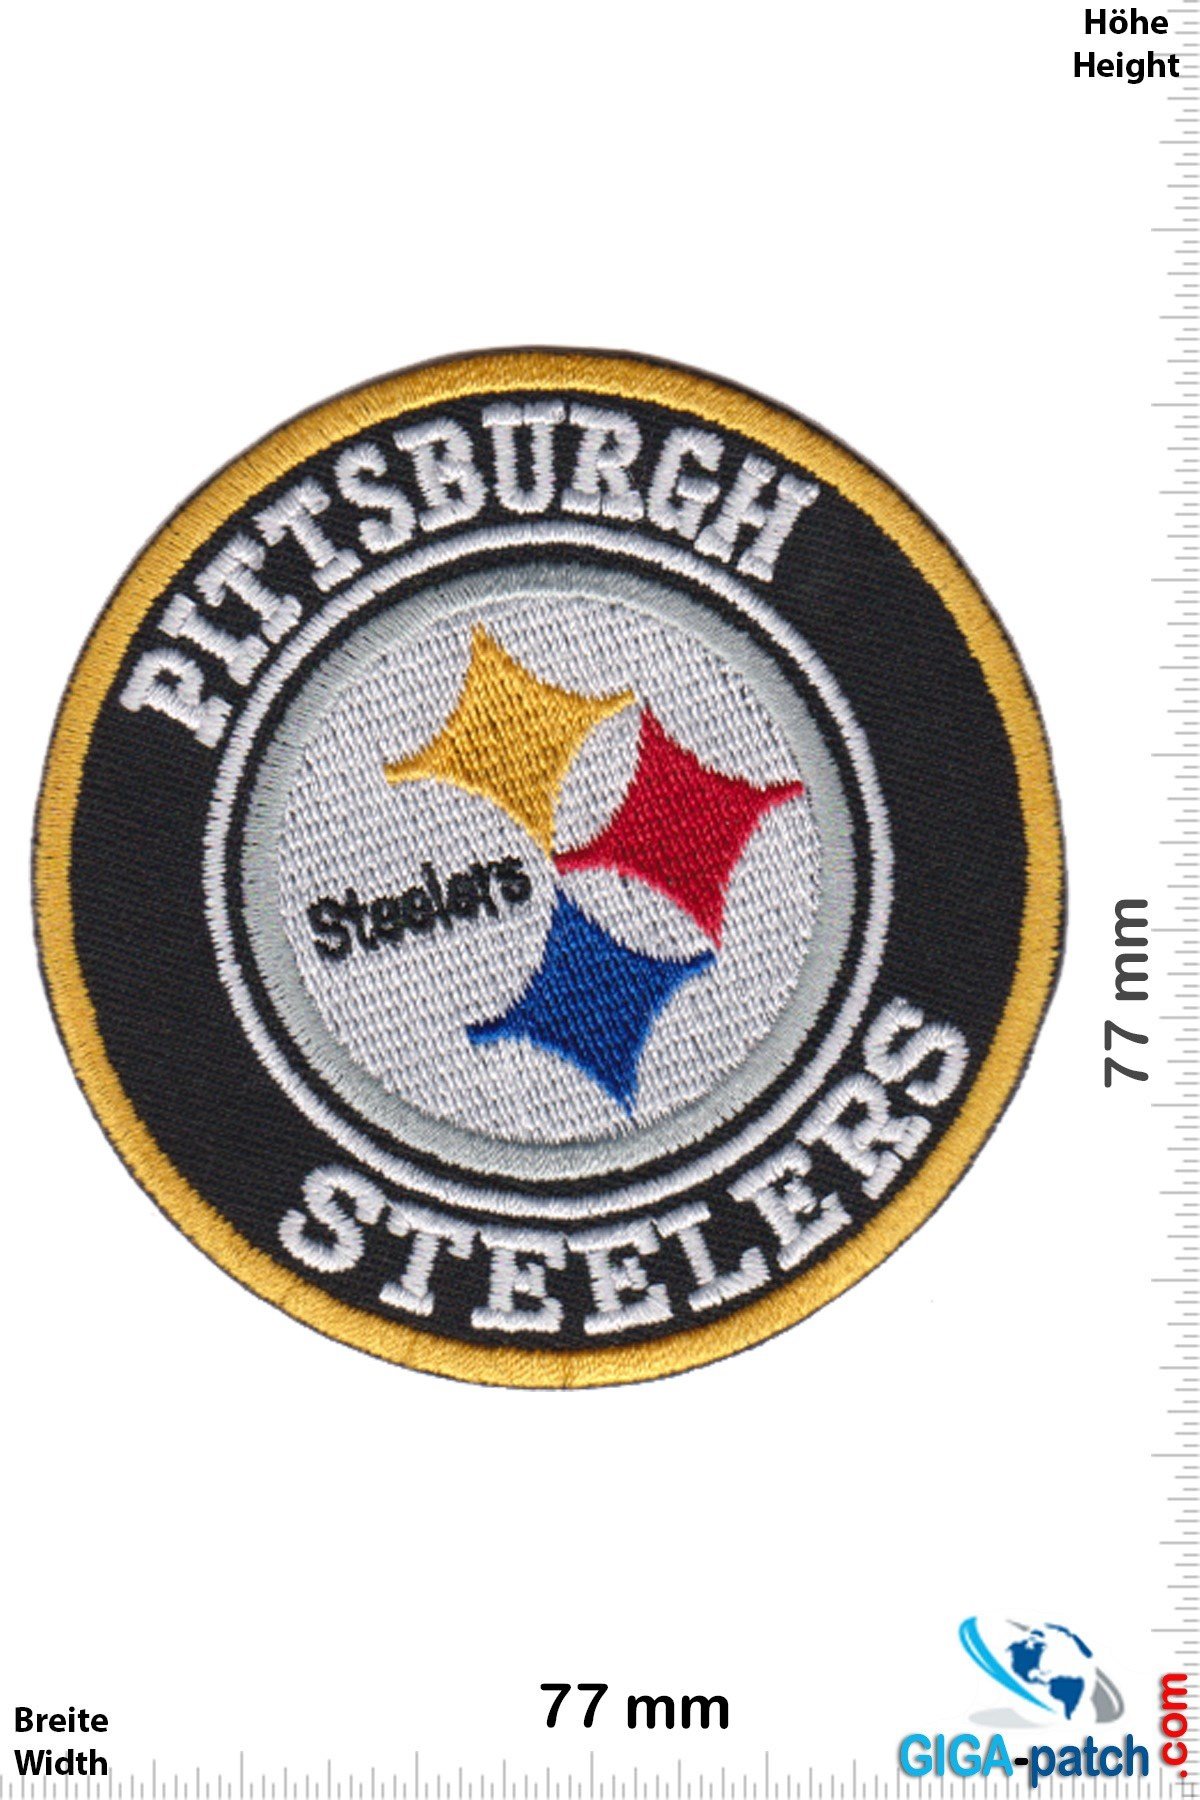 Pittsburgh Sports Shop